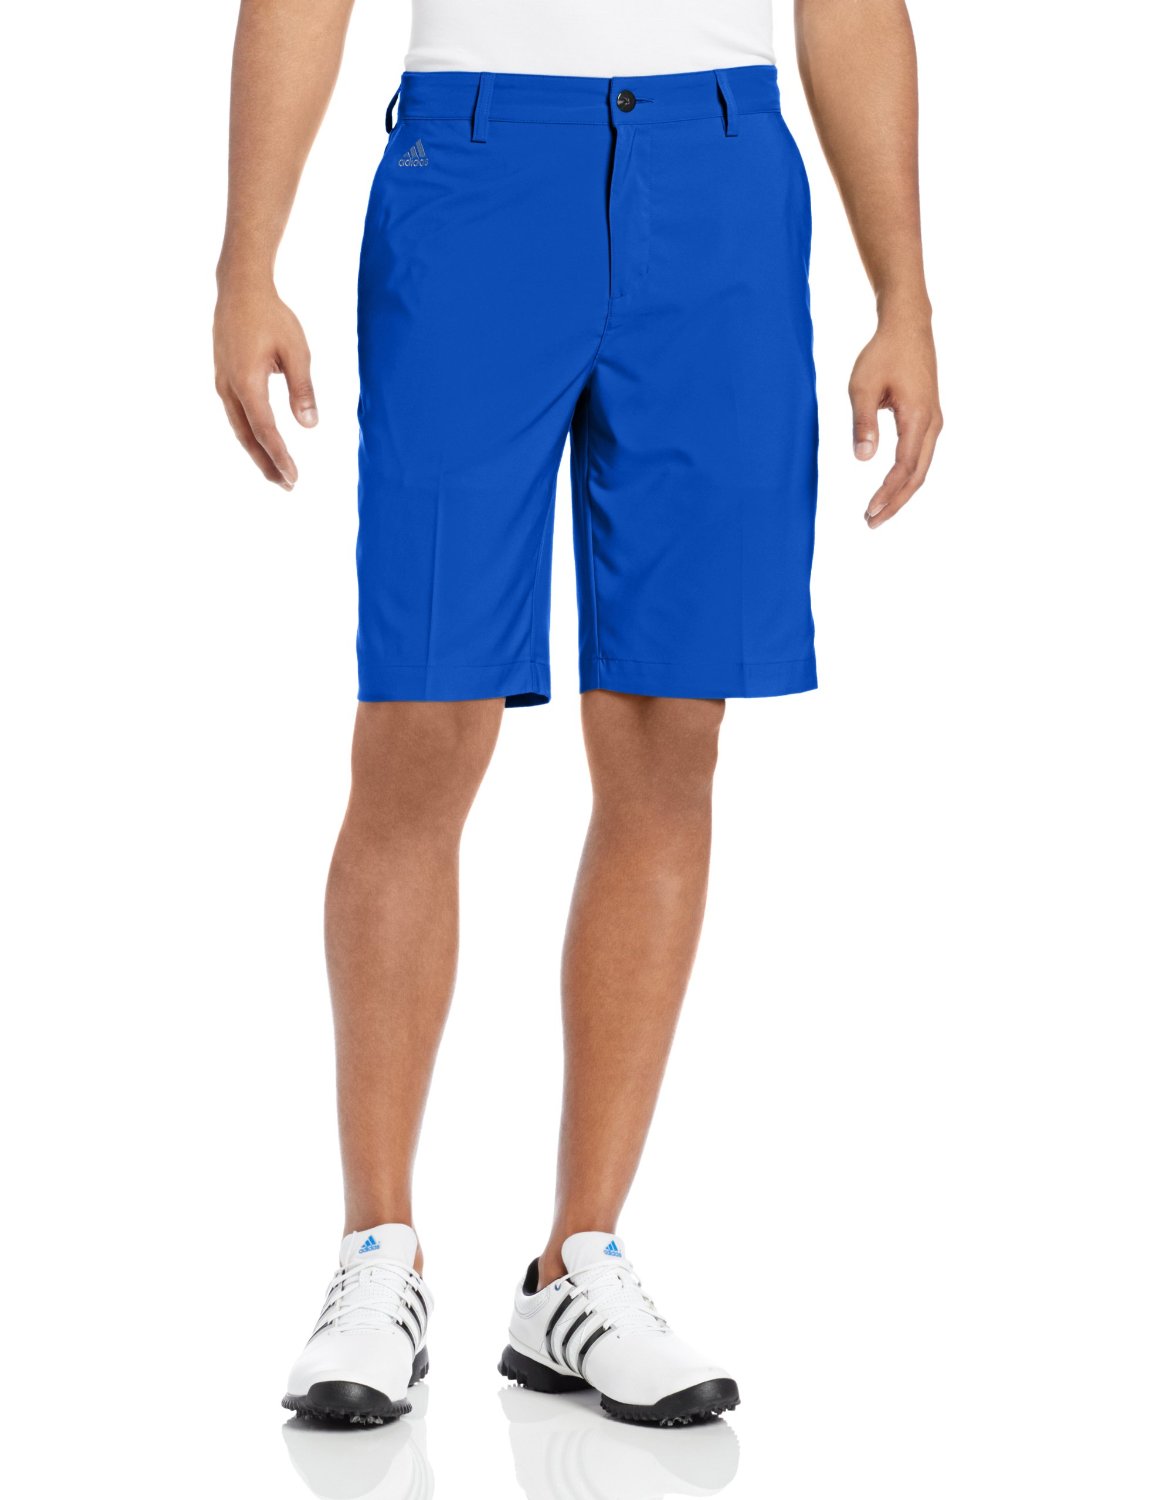 Adidas Mens Climalite 3-Stripes Tech Golf Shorts